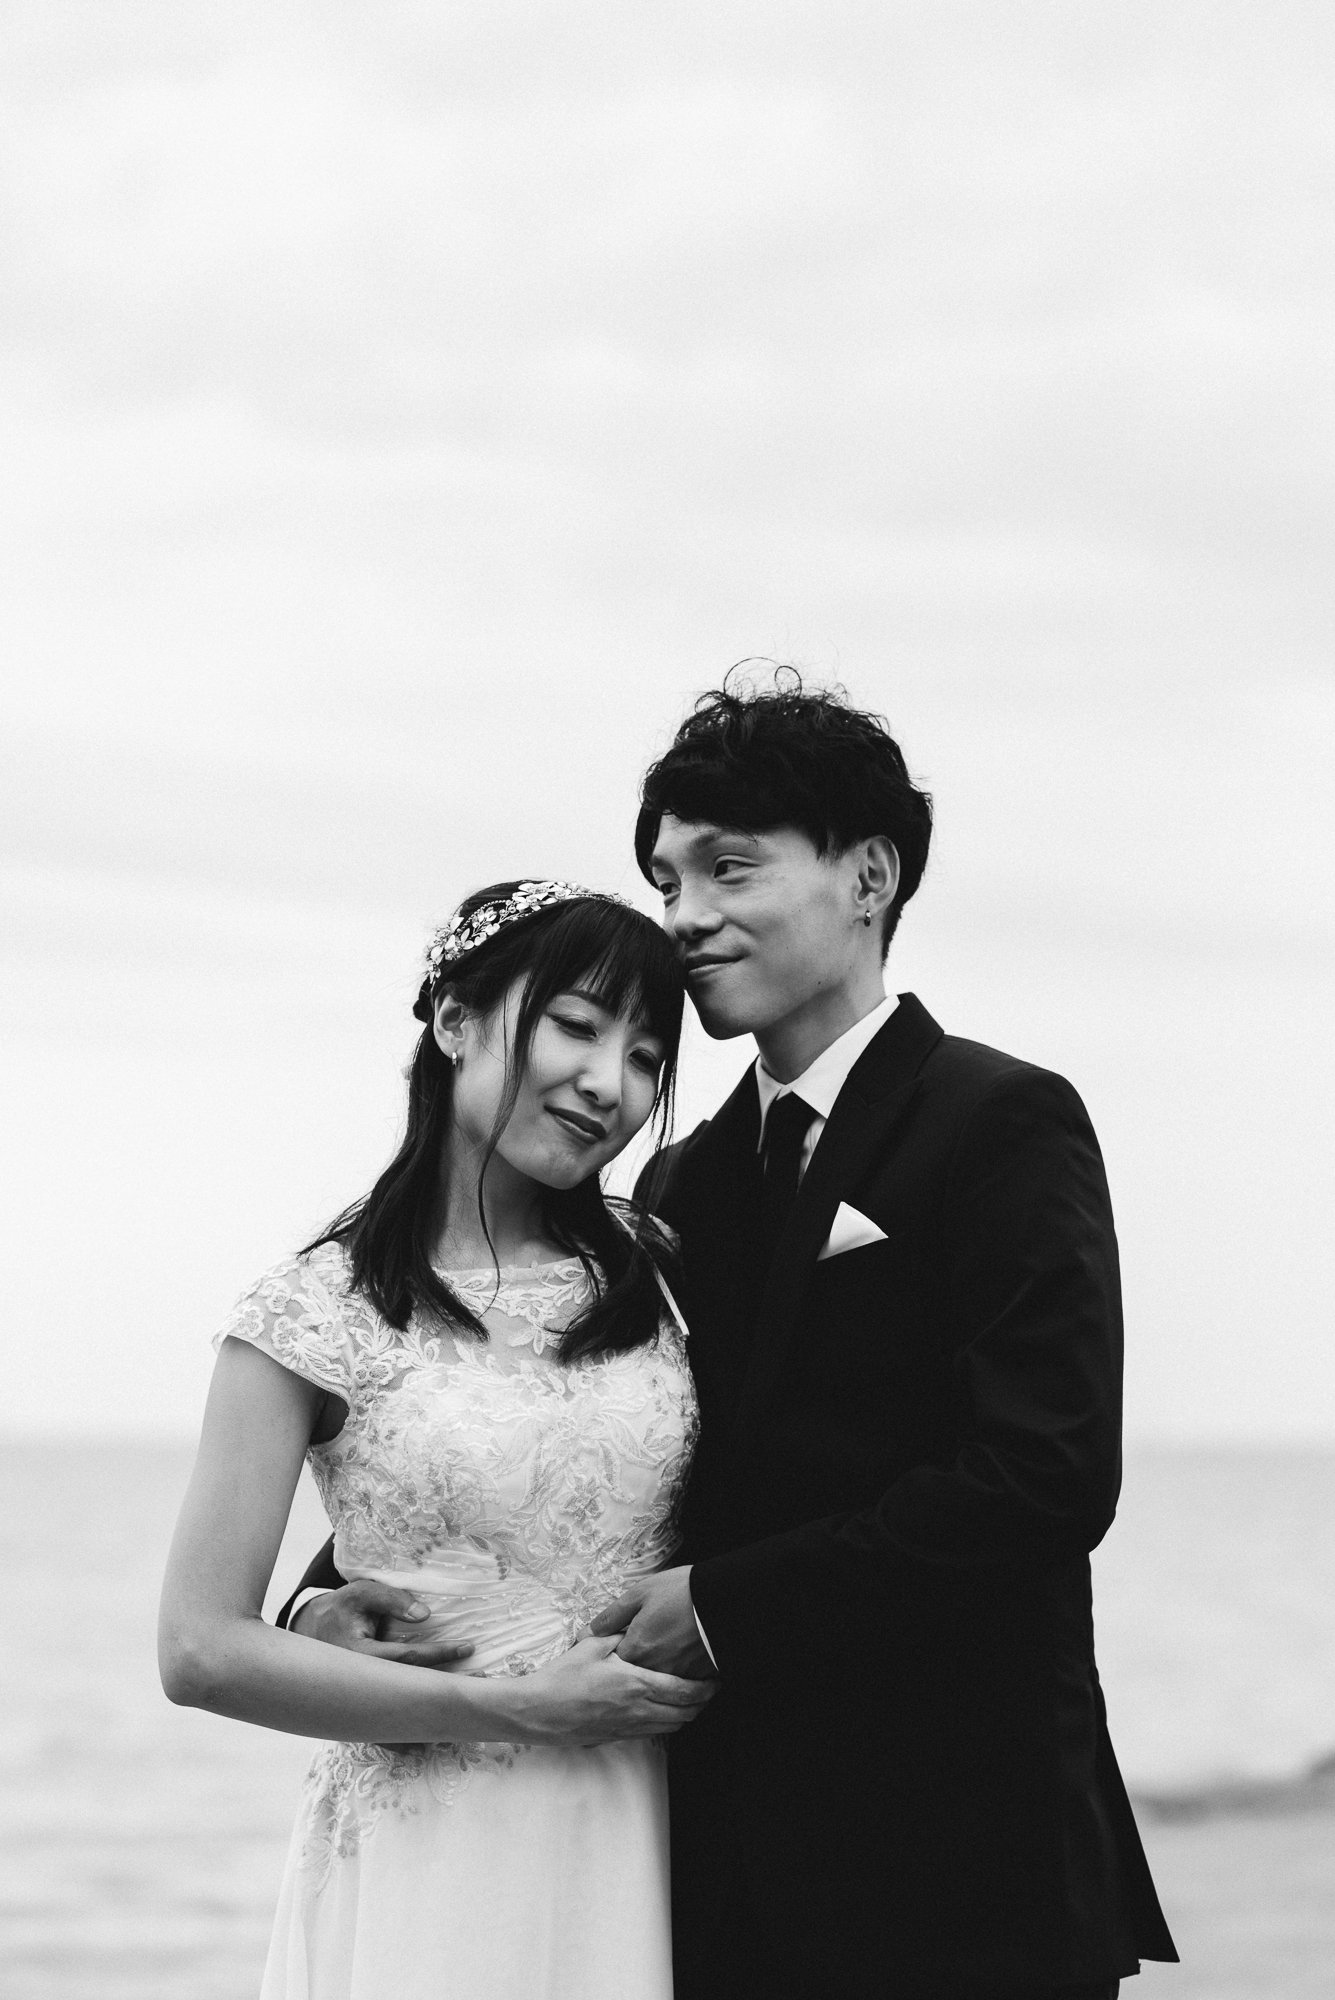 27_kaz-momo_toronto isands_wedding portraits_CY13650.JPG